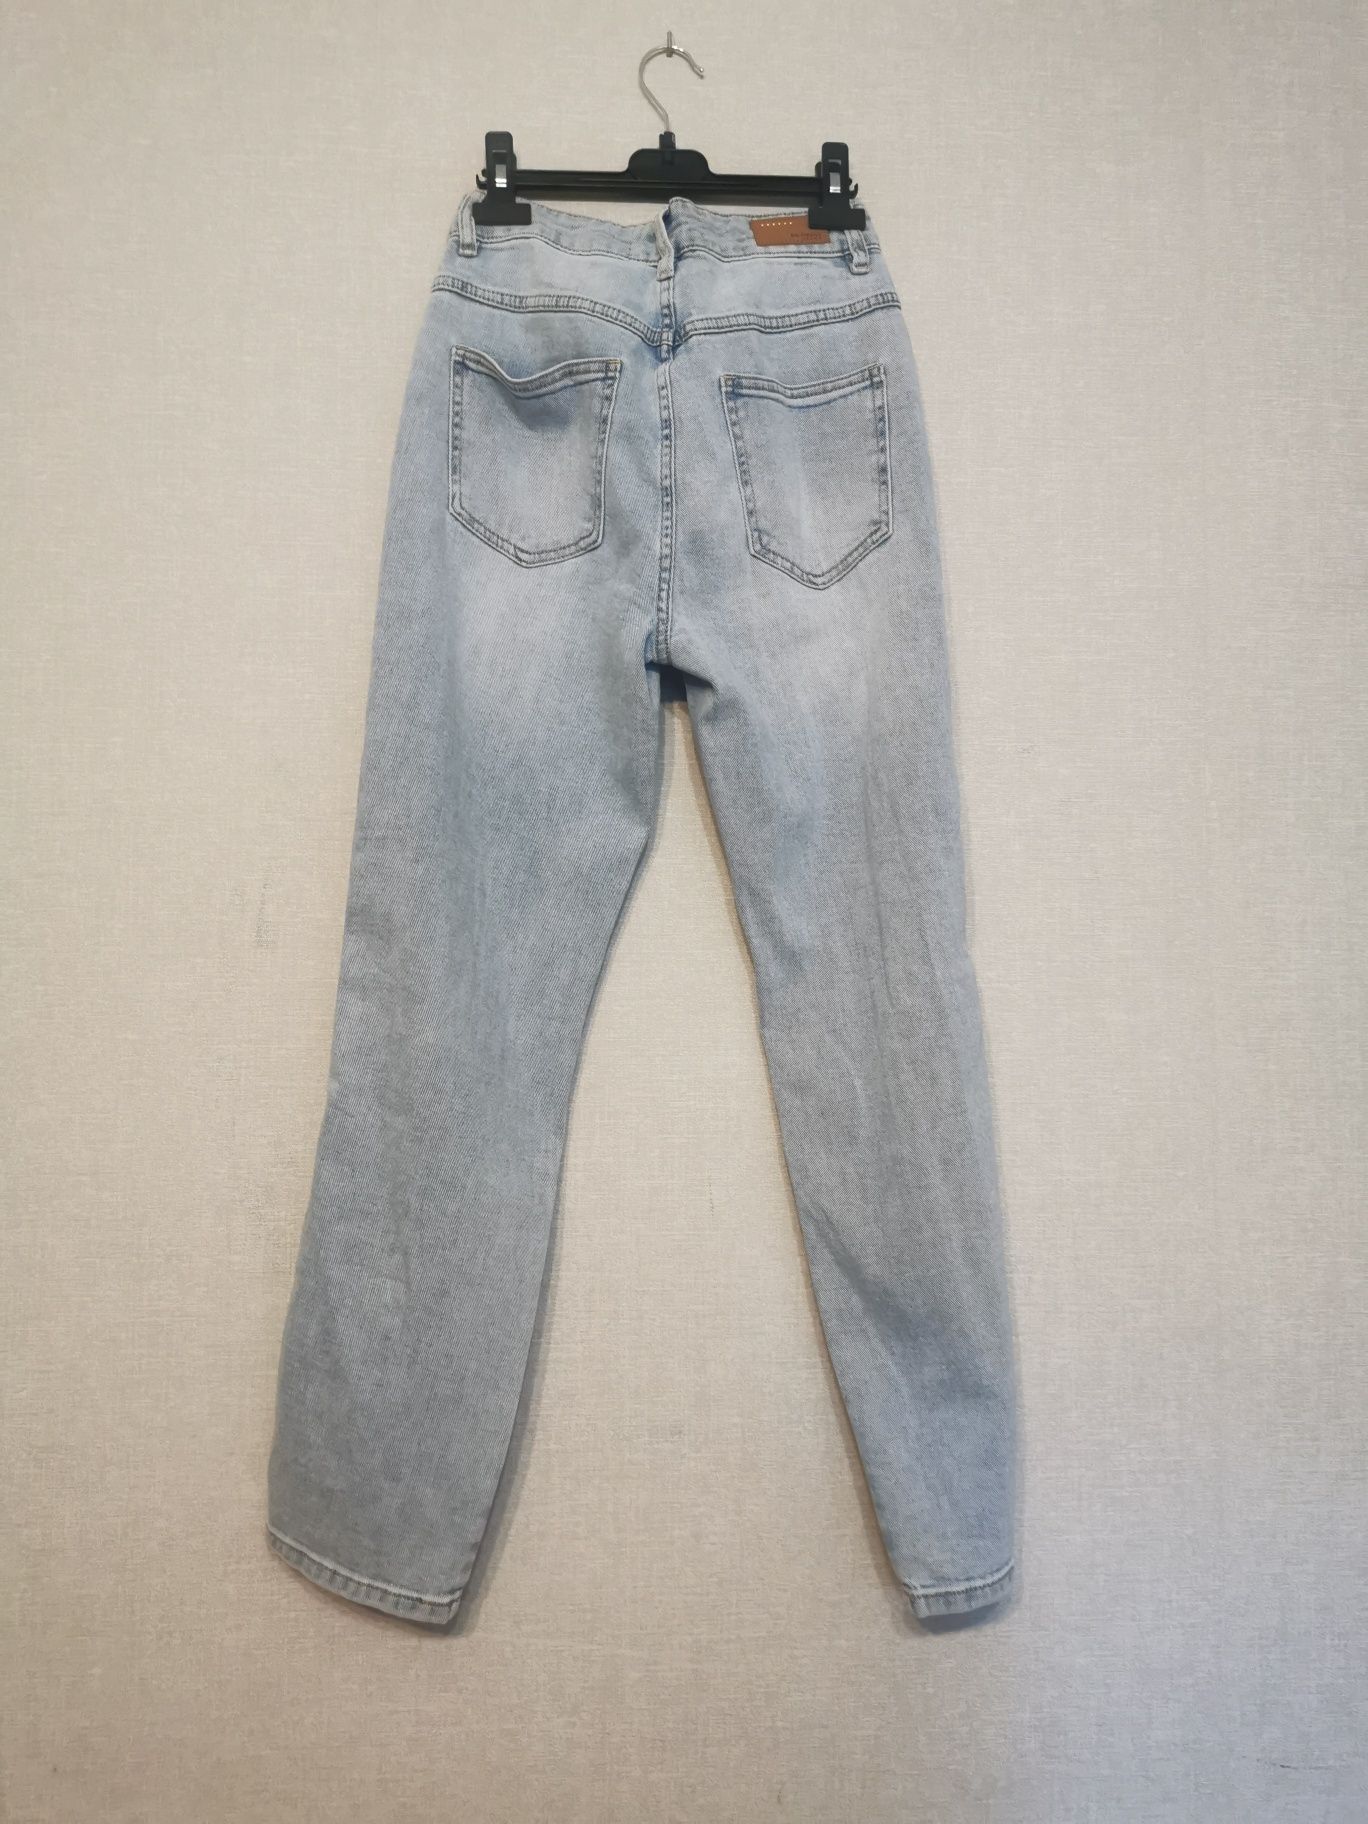 Spodnie jeansy z dziurami r. S